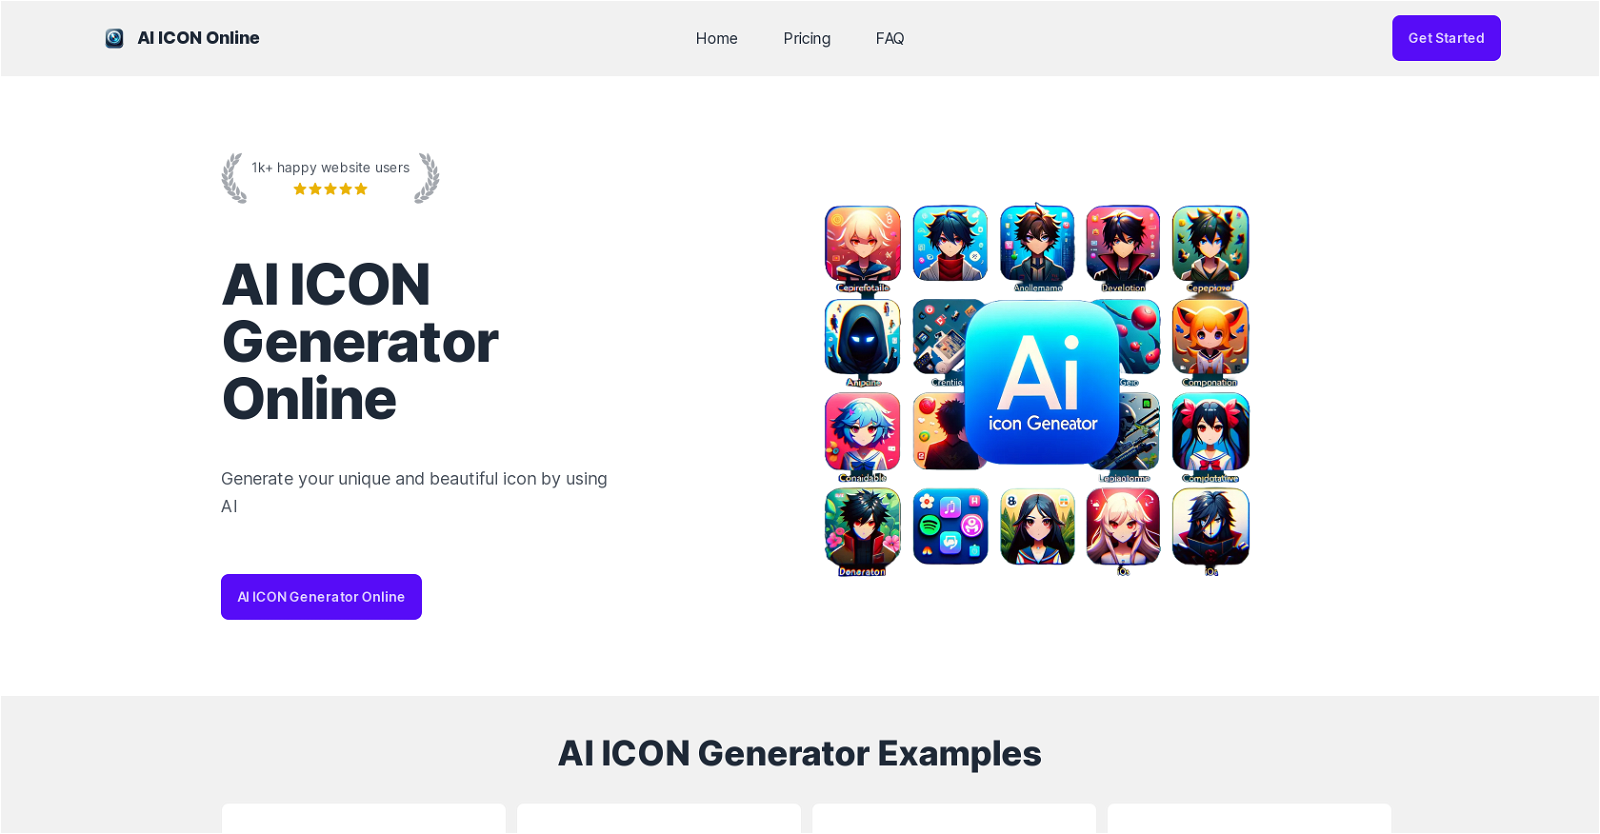 AI ICON Online website